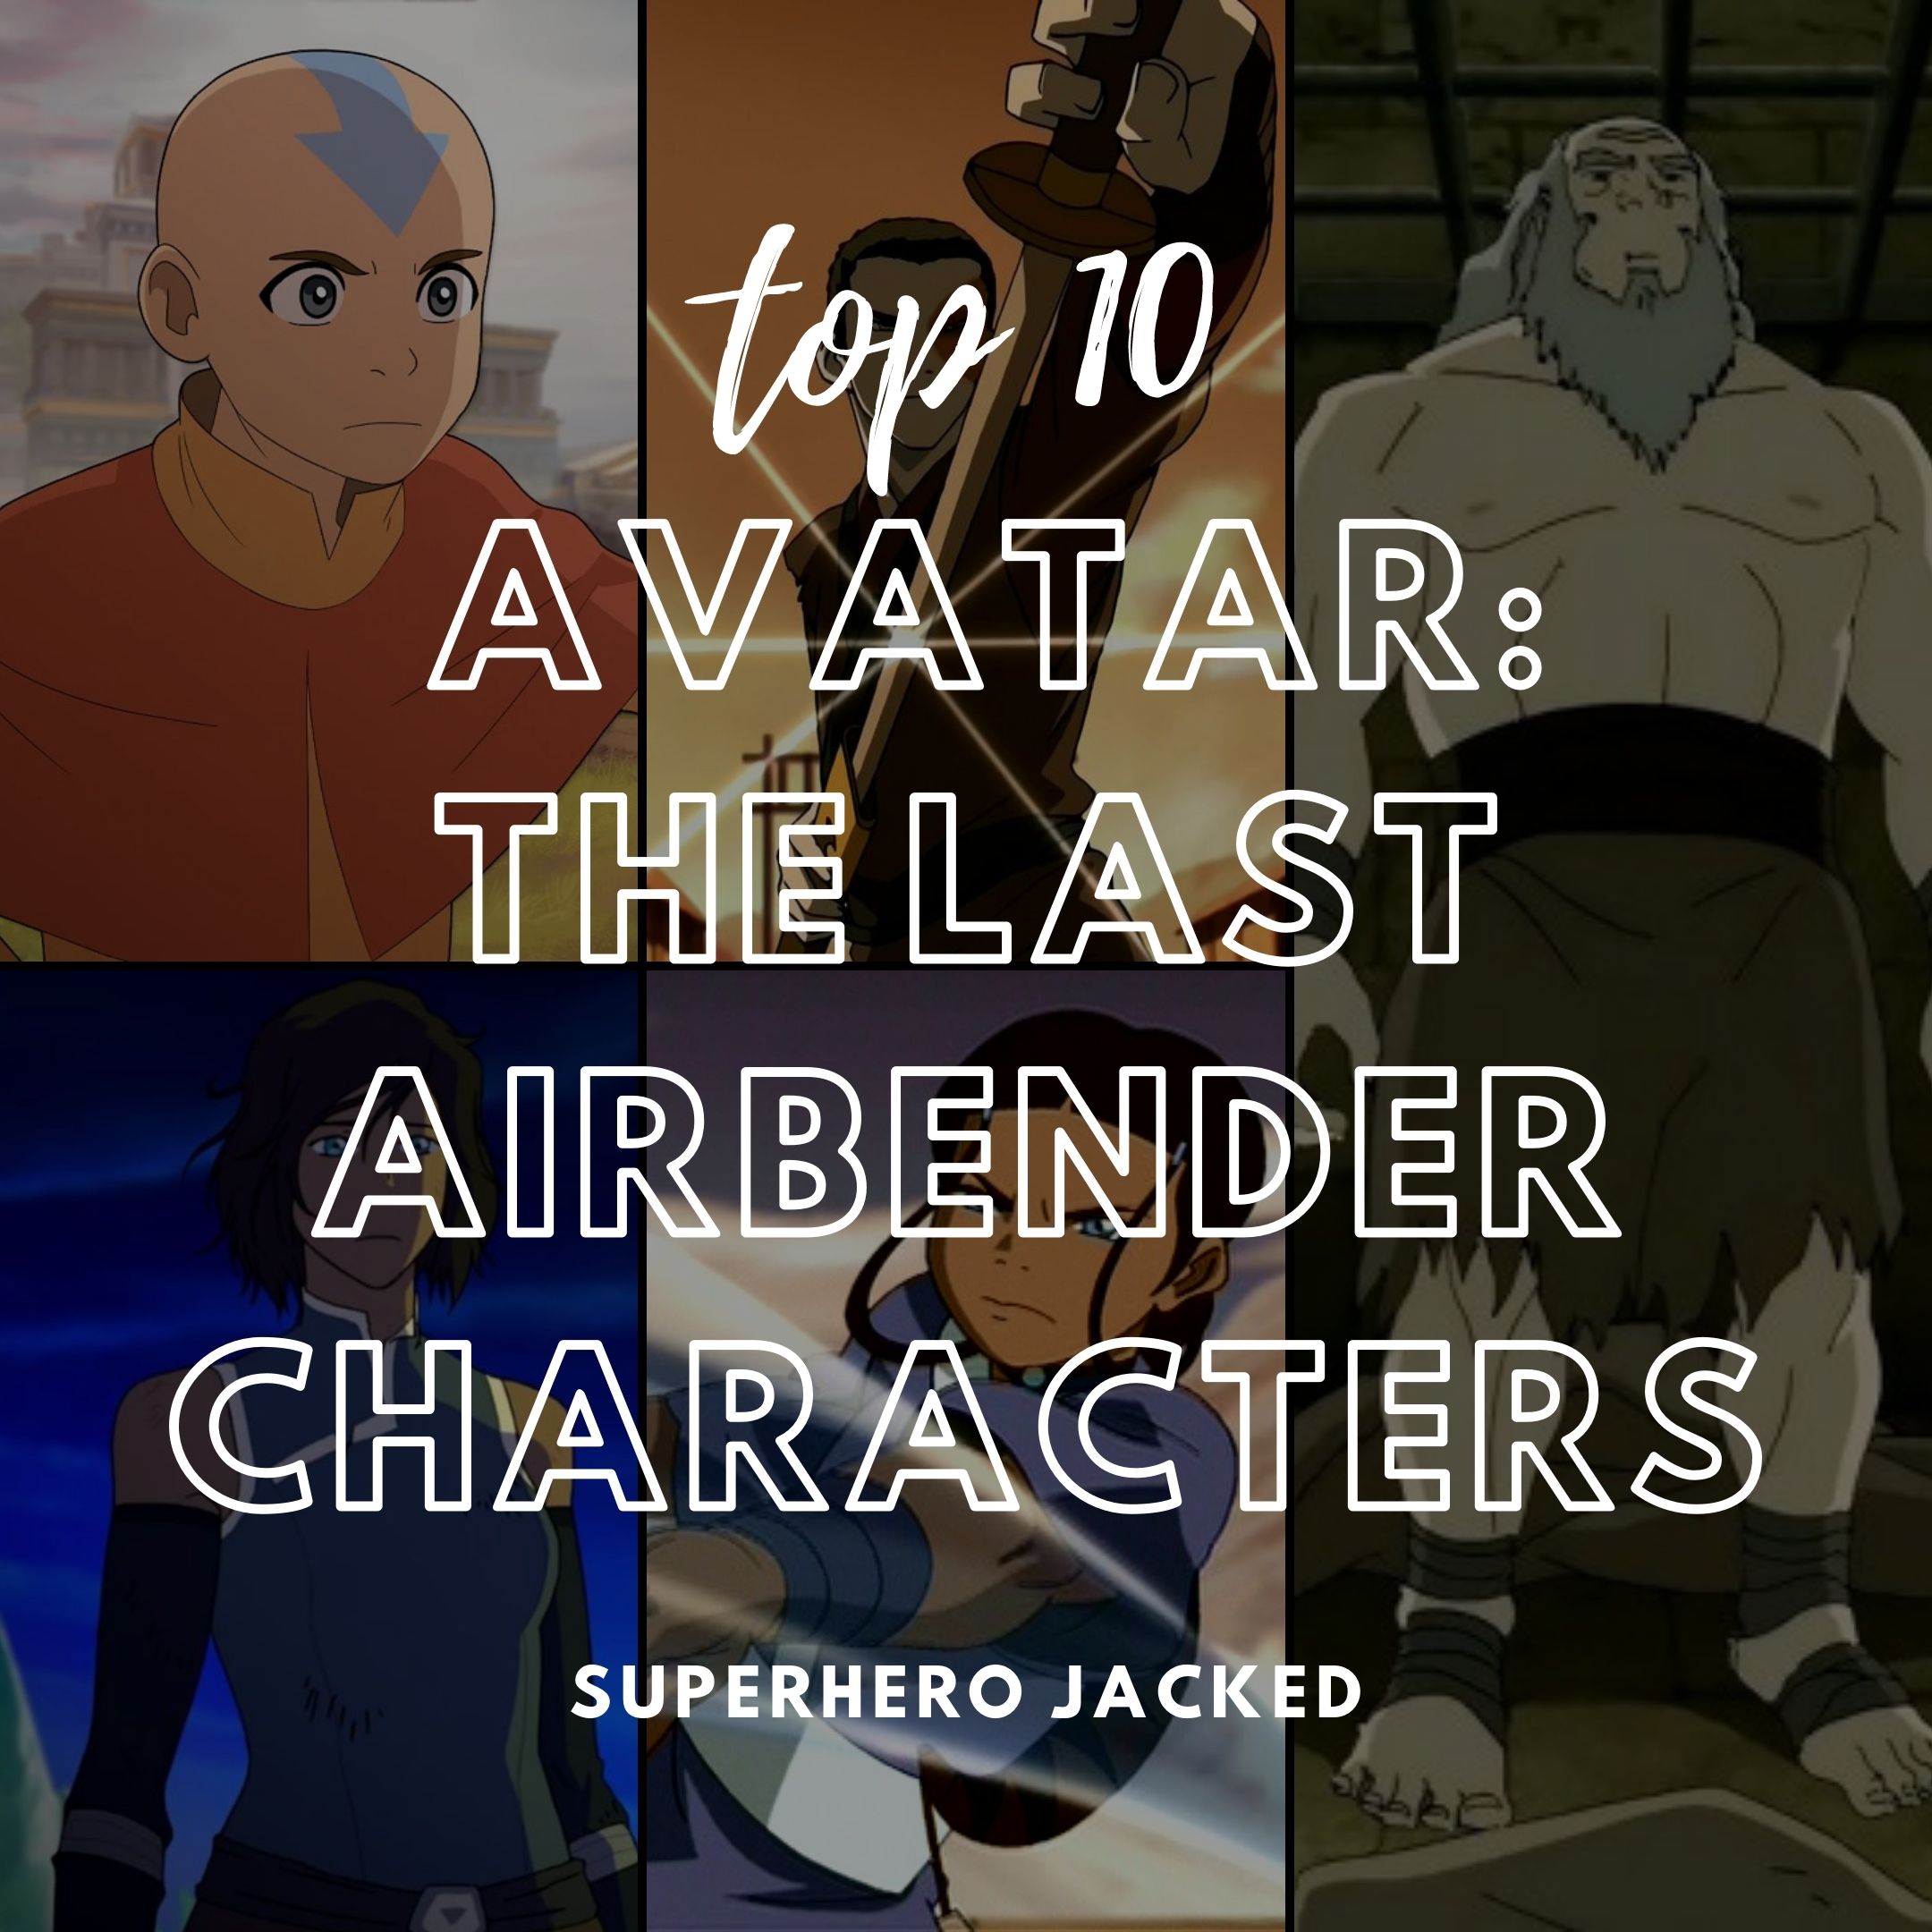 CategoryAvatar The Last Airbender characters  Nickelodeon Movies Wiki   Fandom